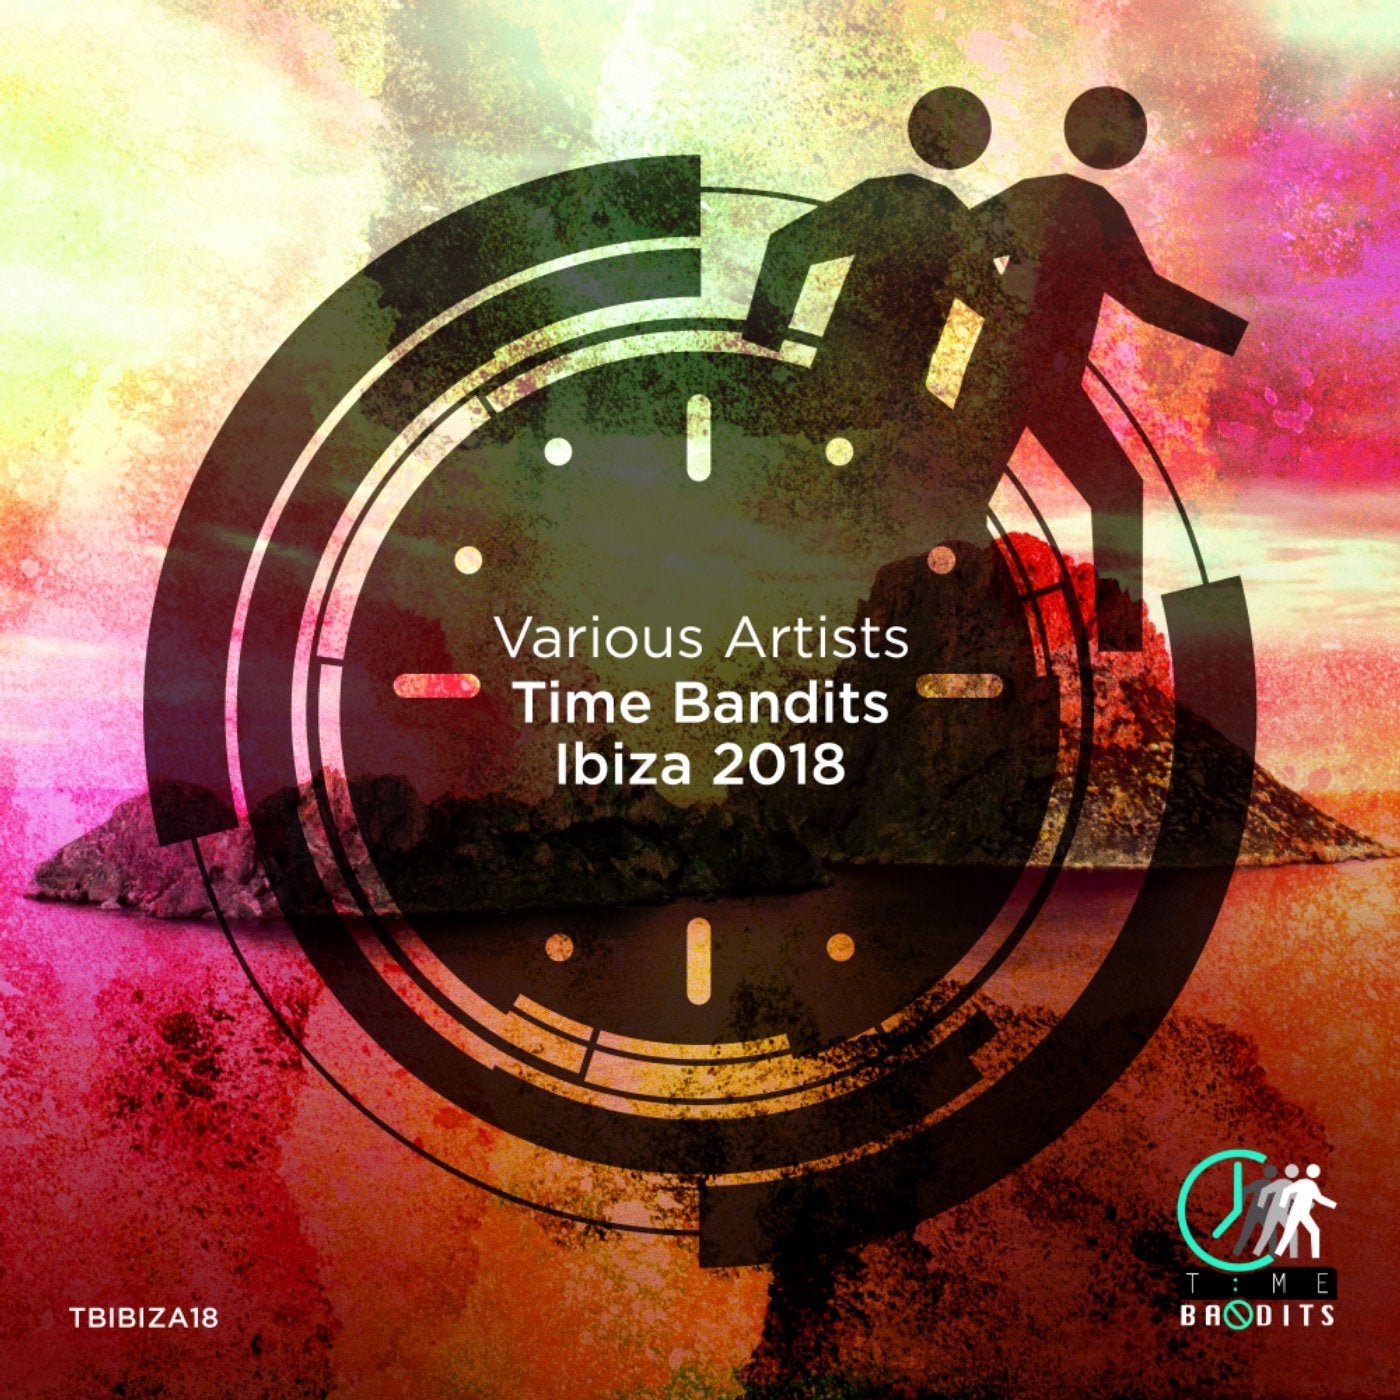 Time Bandits Ibiza 2018